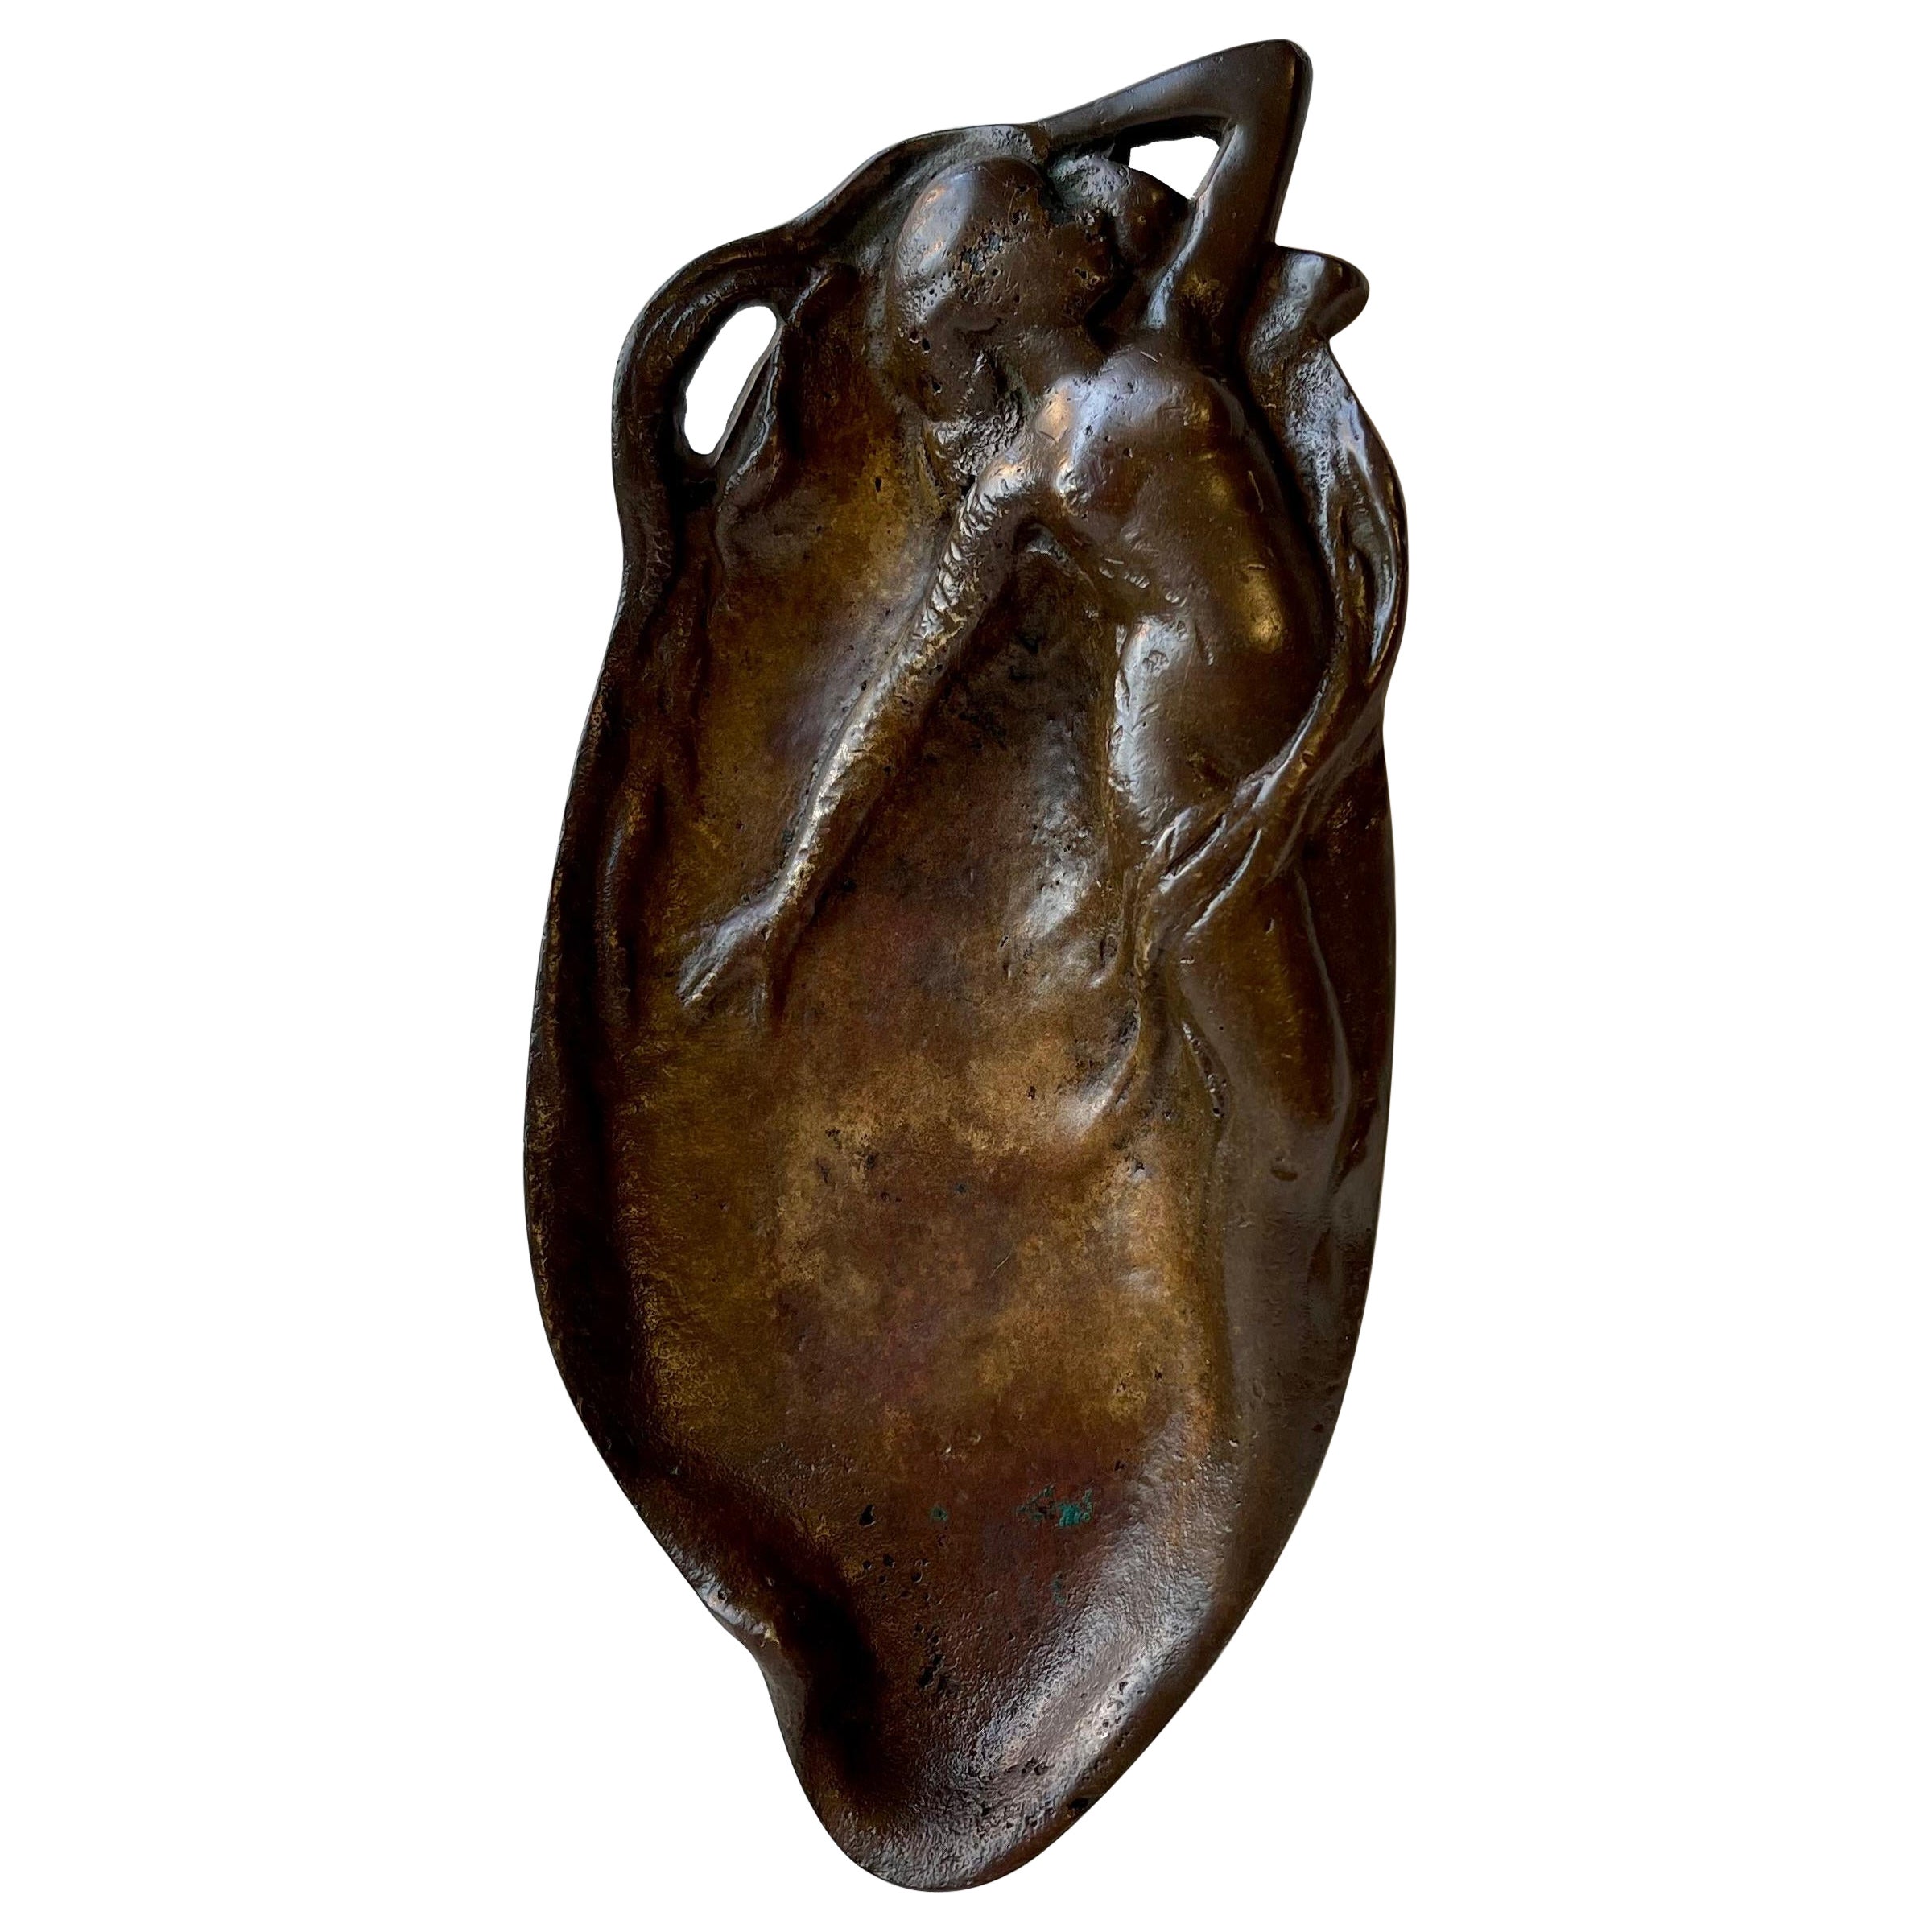 Skulpturale französische Jugendstil- Meerjungfrauenschale aus Bronze in Bronze